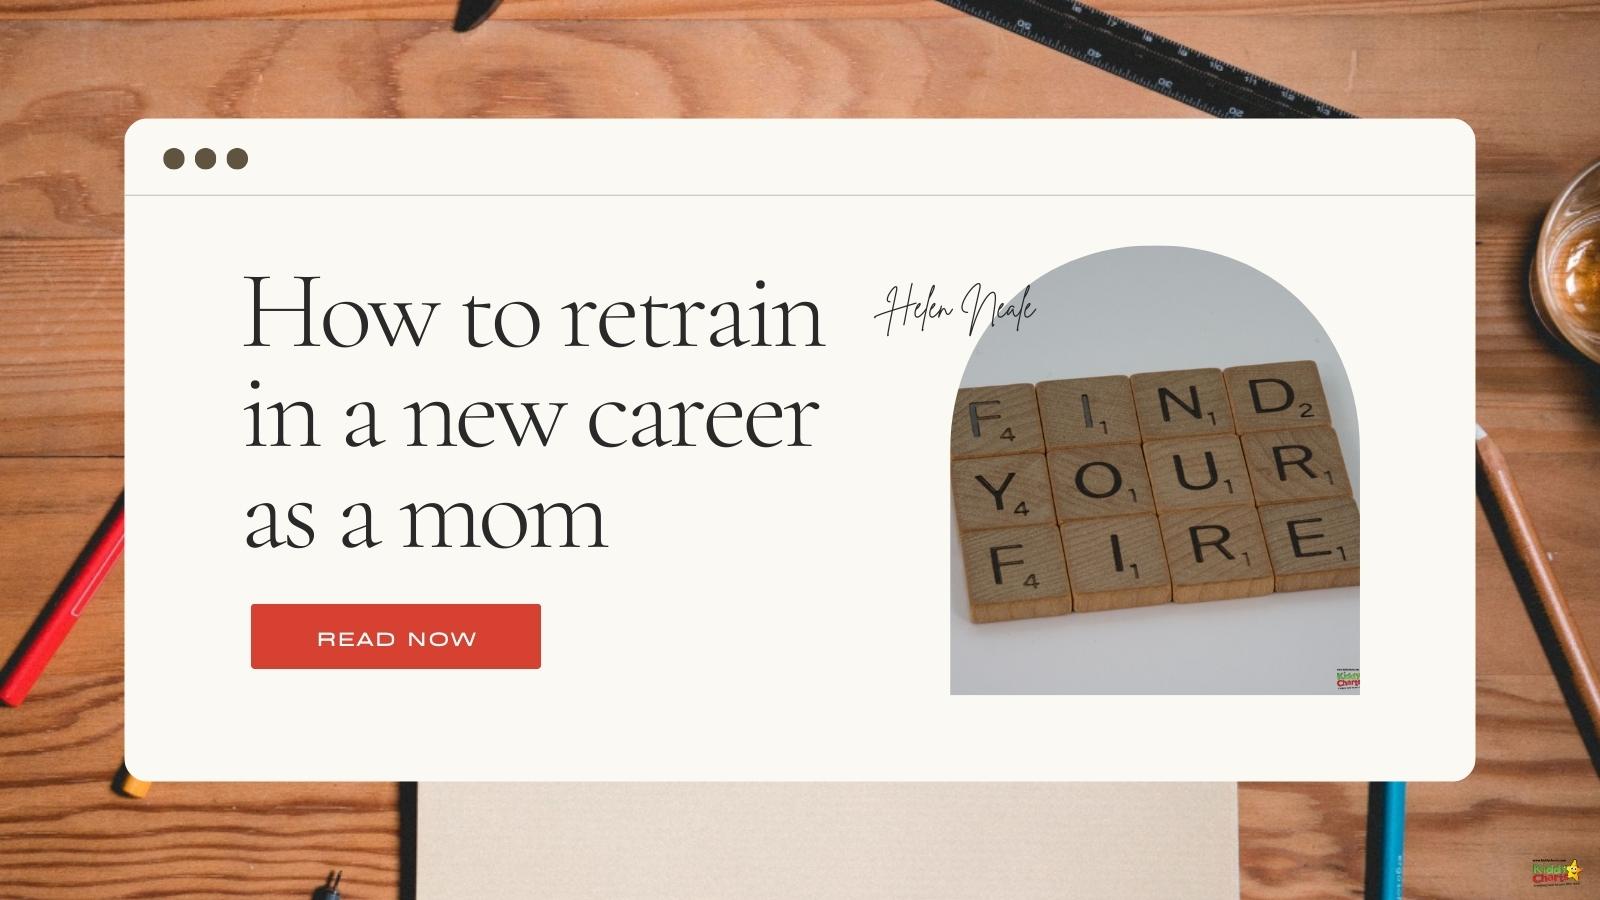 How to retrain for a new career as a mom